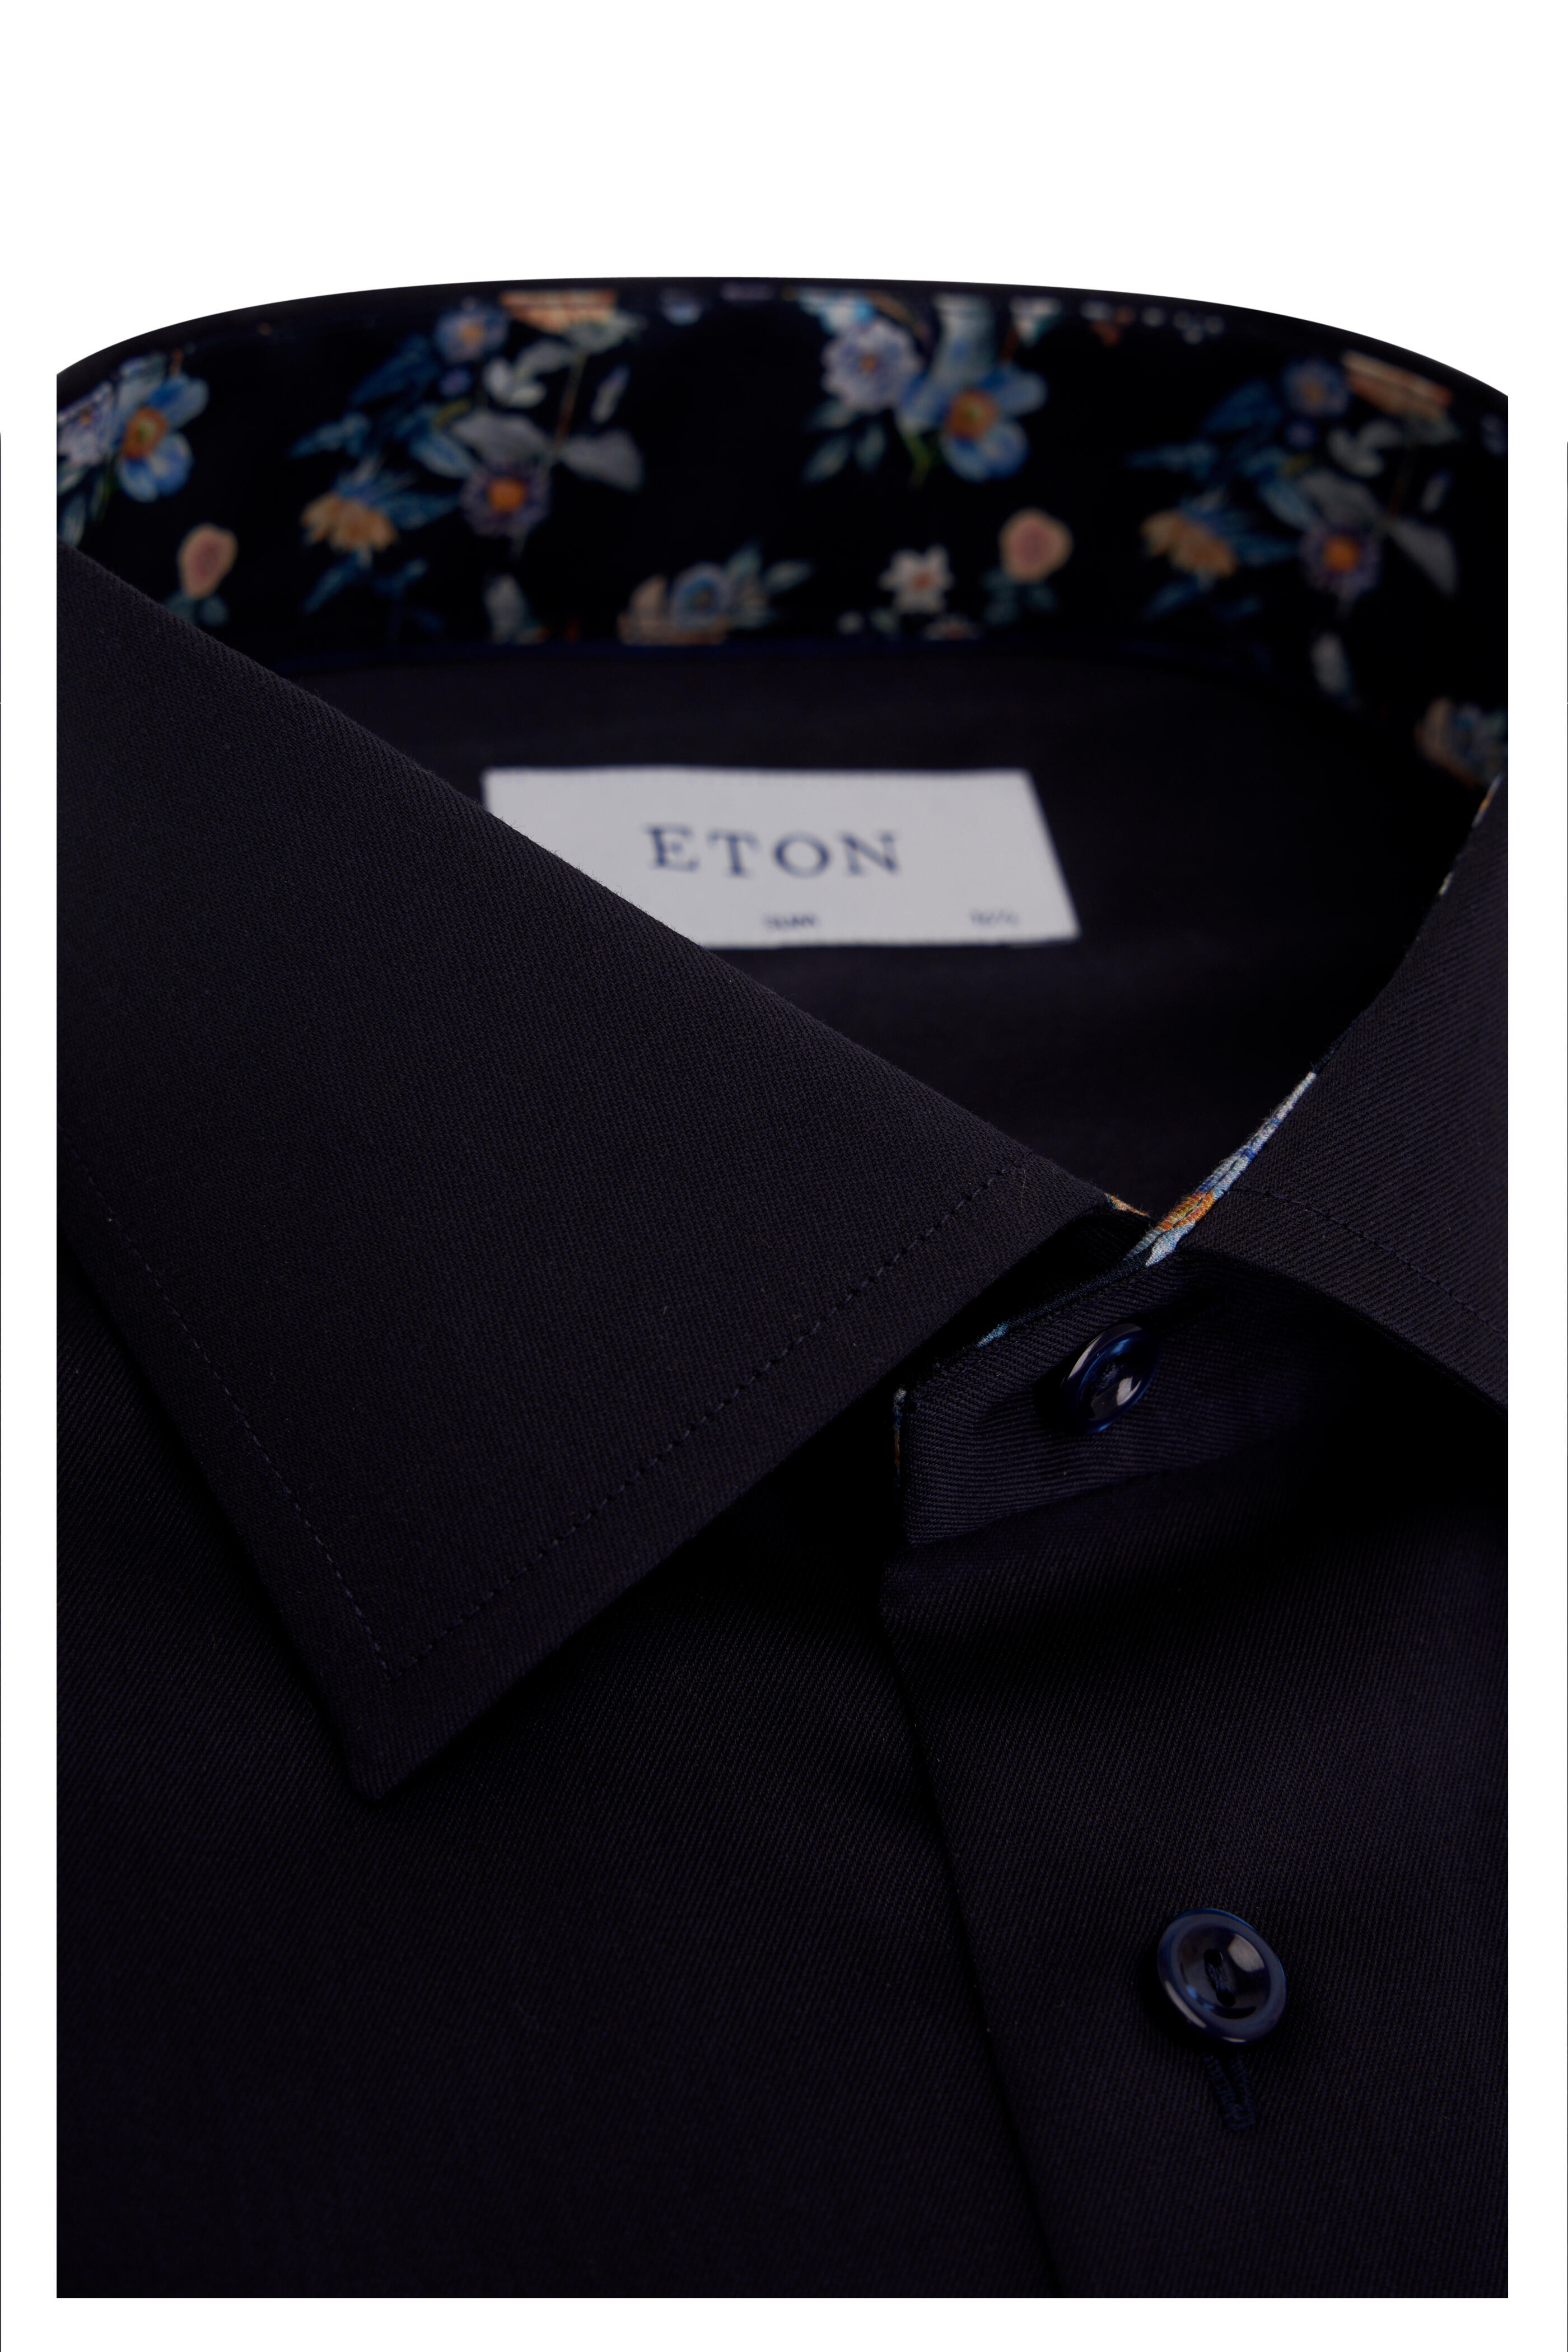 Eton - Solid Navy Cotton Dress Shirt | Mitchell Stores